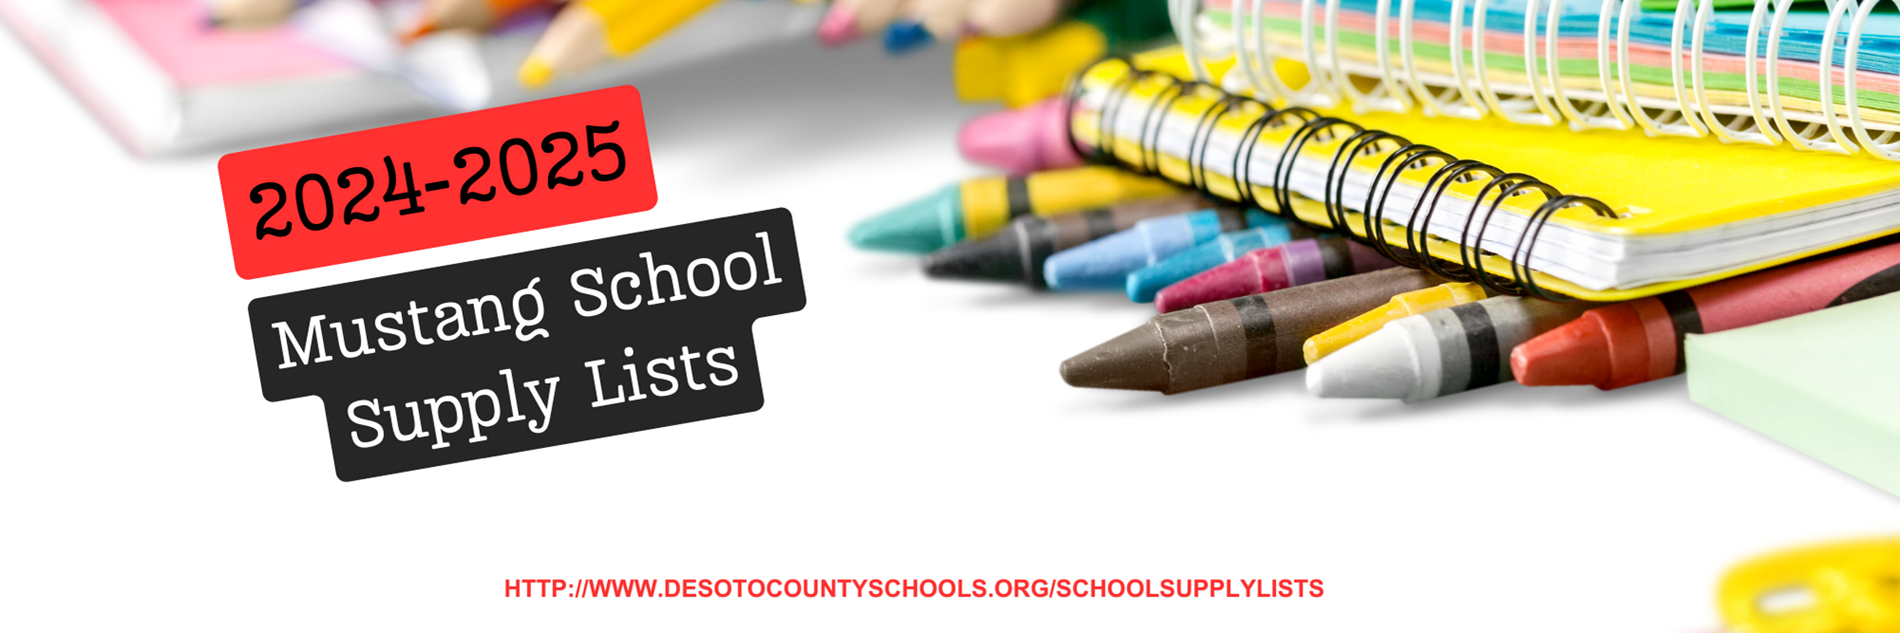 2024-2025 School Supply Lists